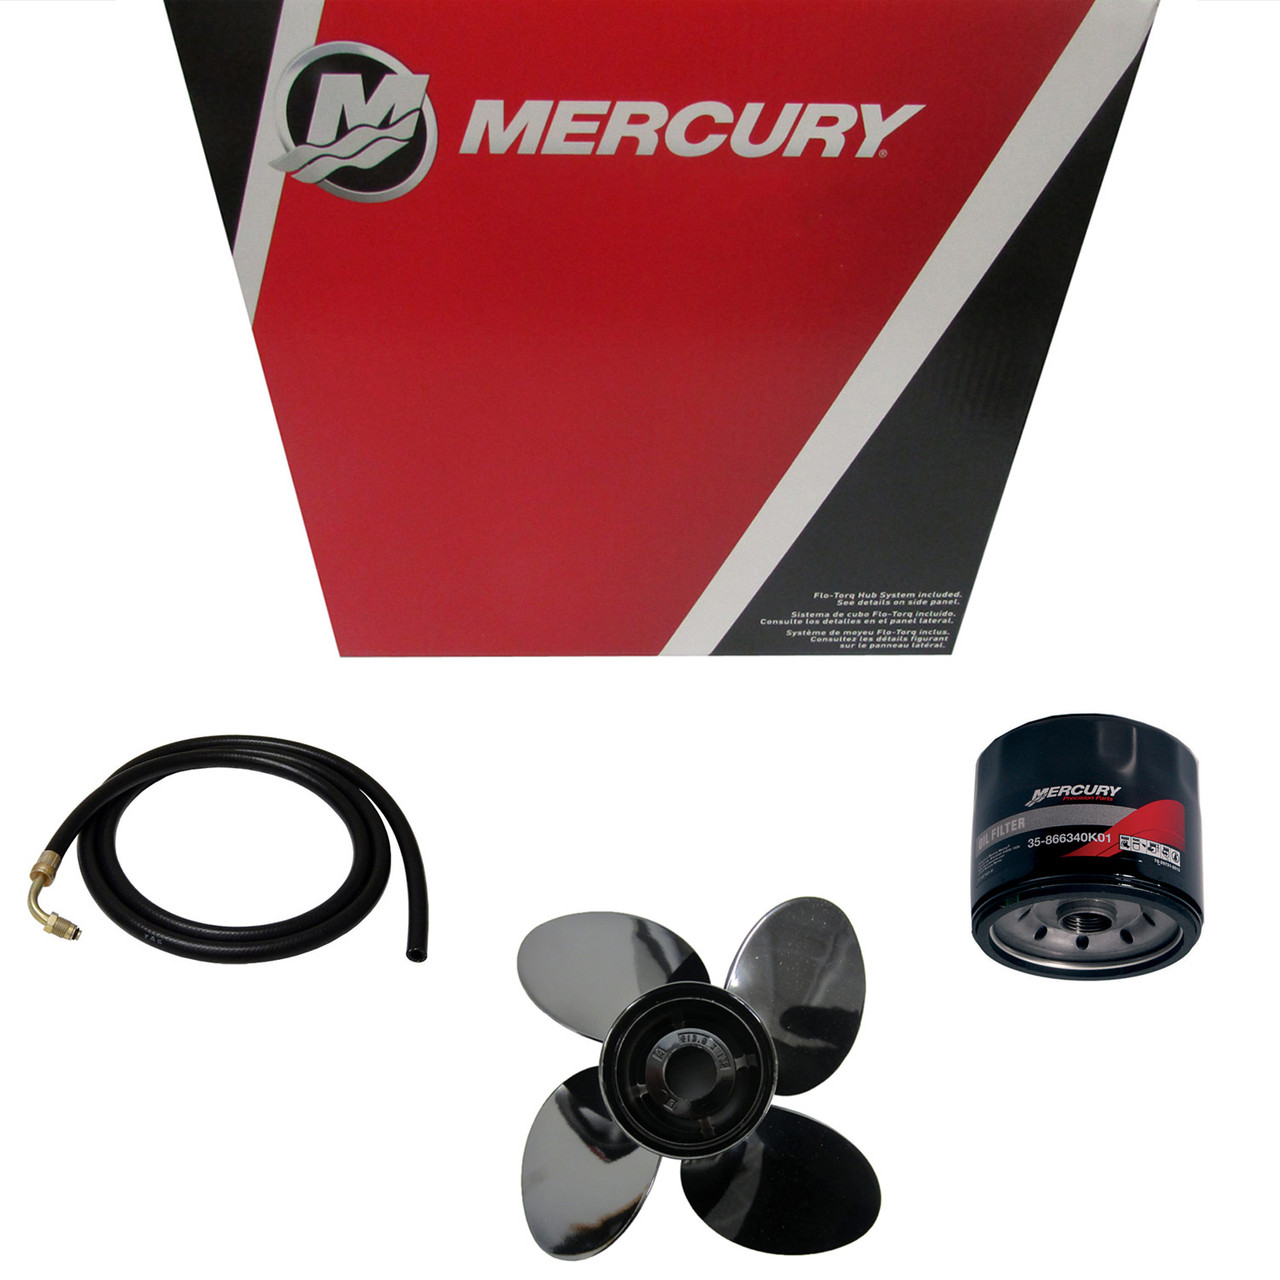 Mercury Marine / Mercruiser New OEM Propshaft Kit, 840450A03